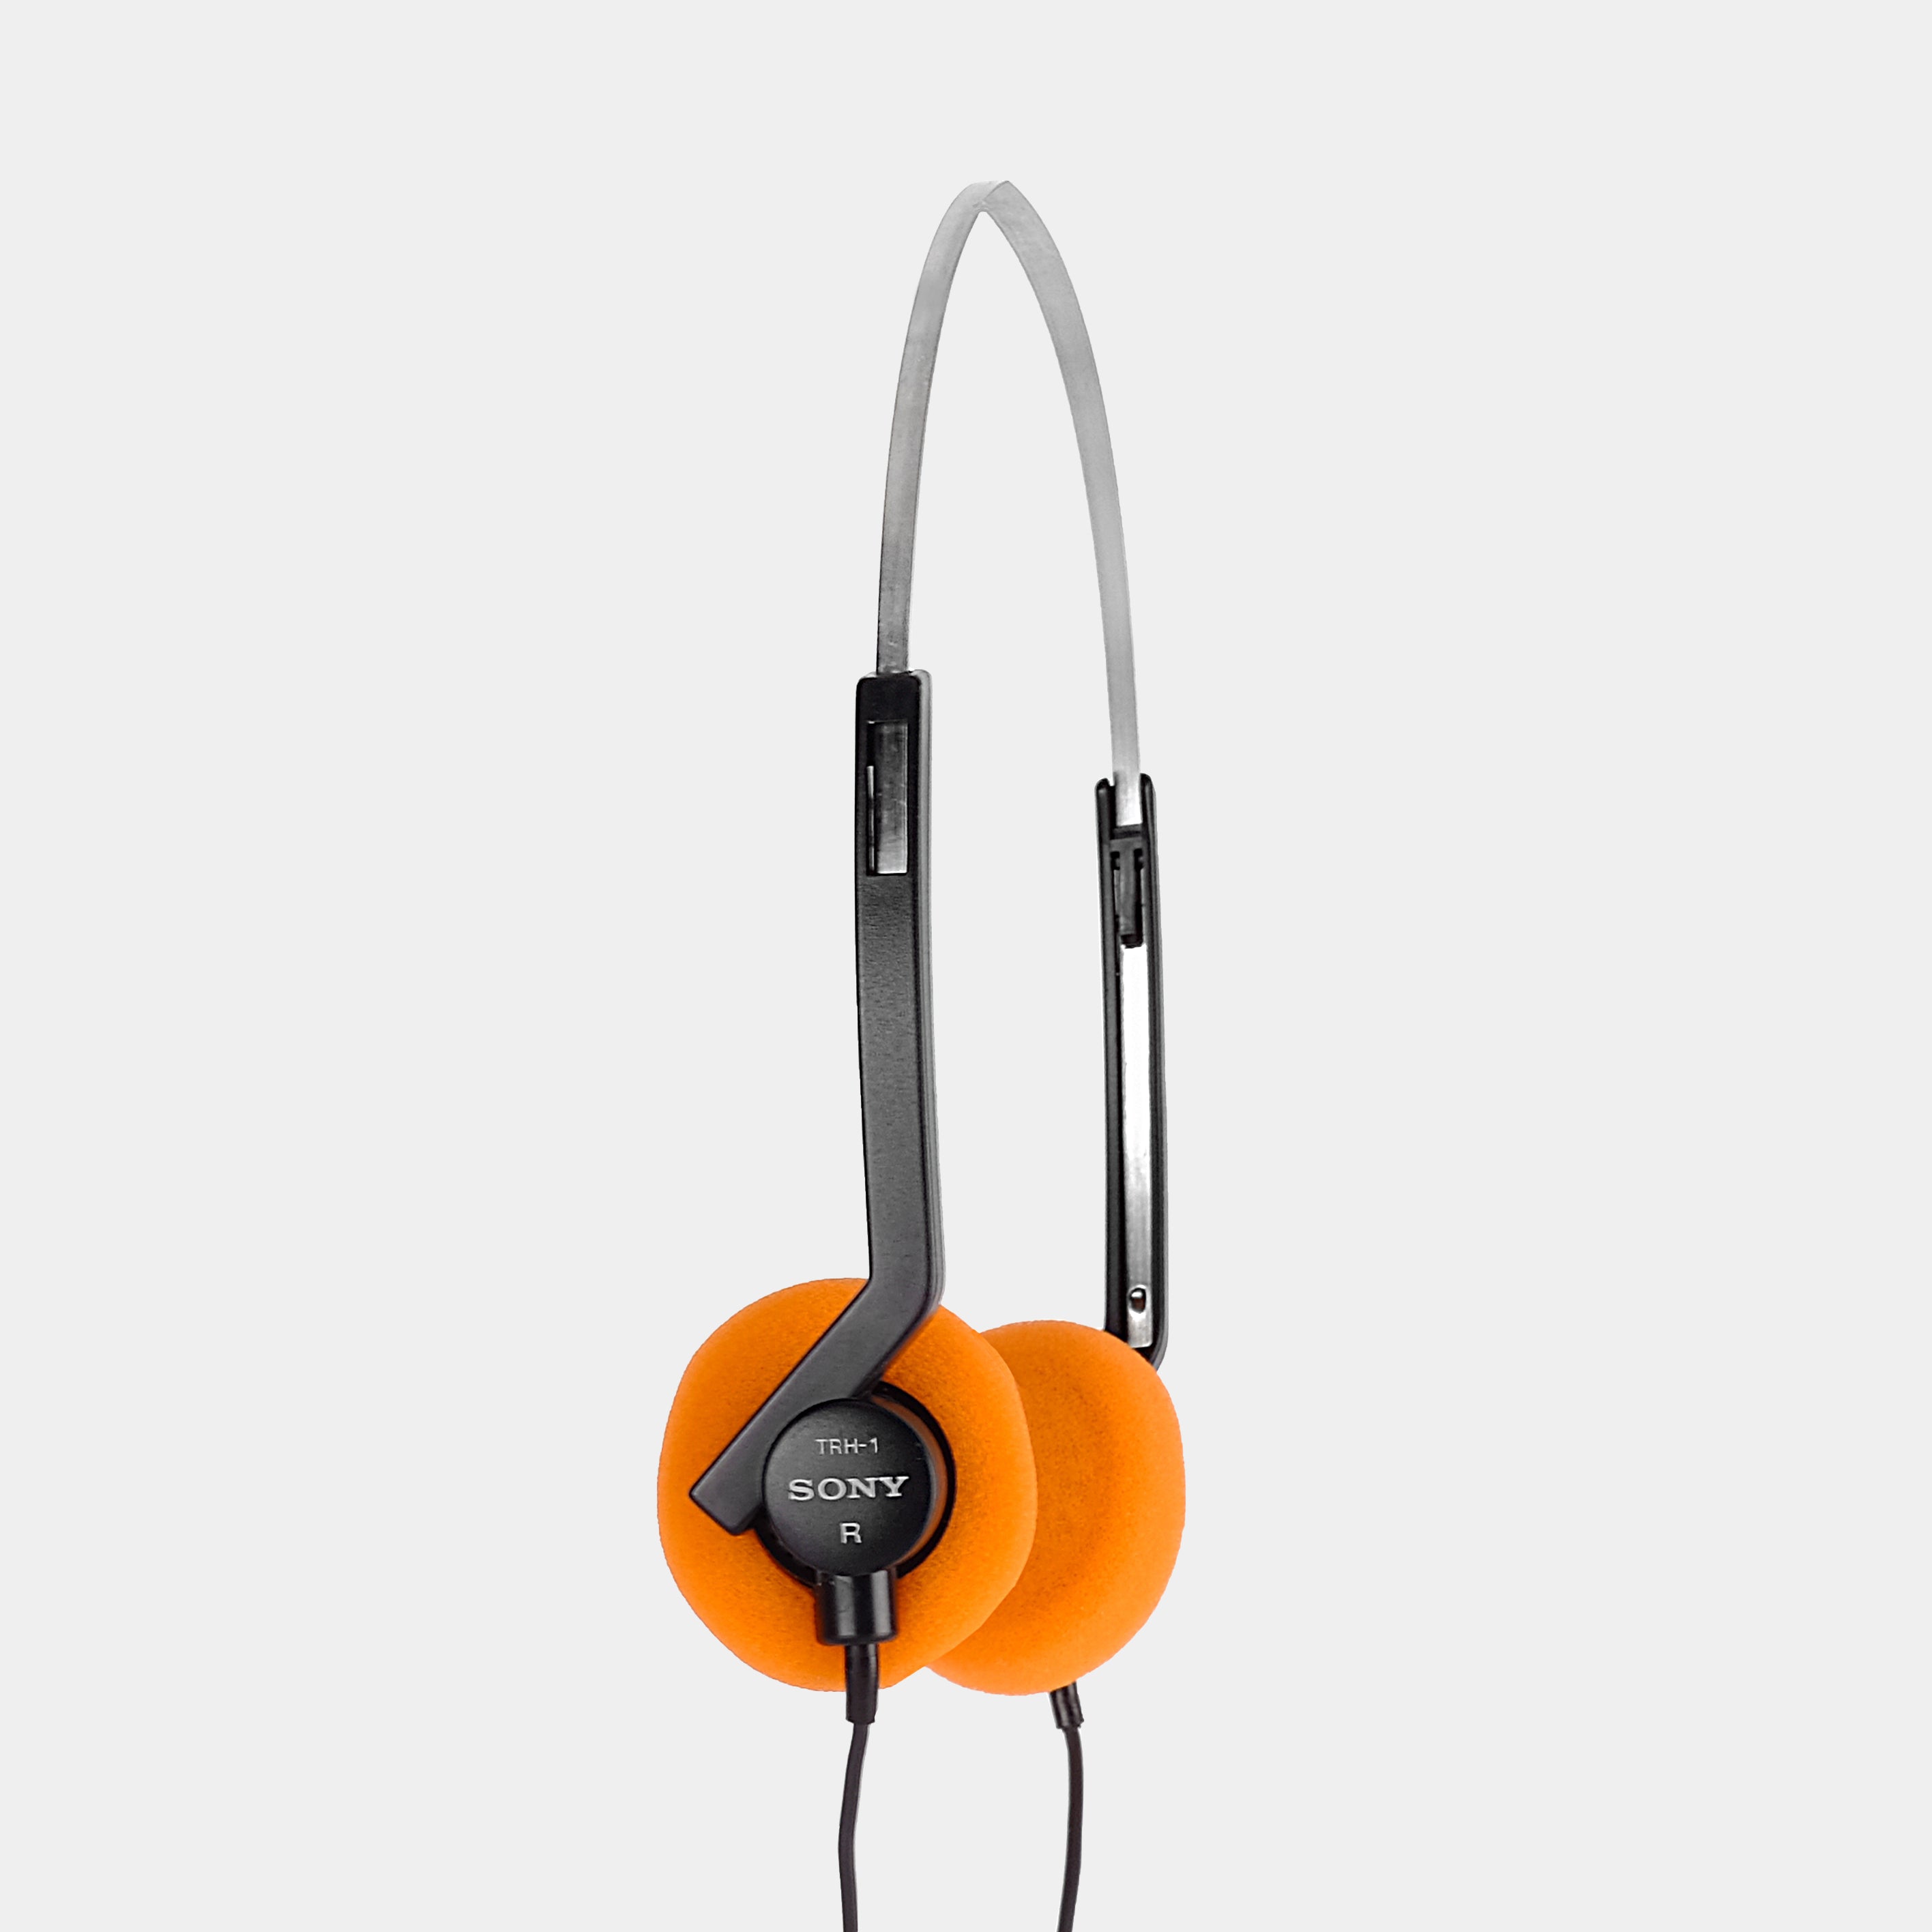 Sony TRH-1 On-Ear Headphones